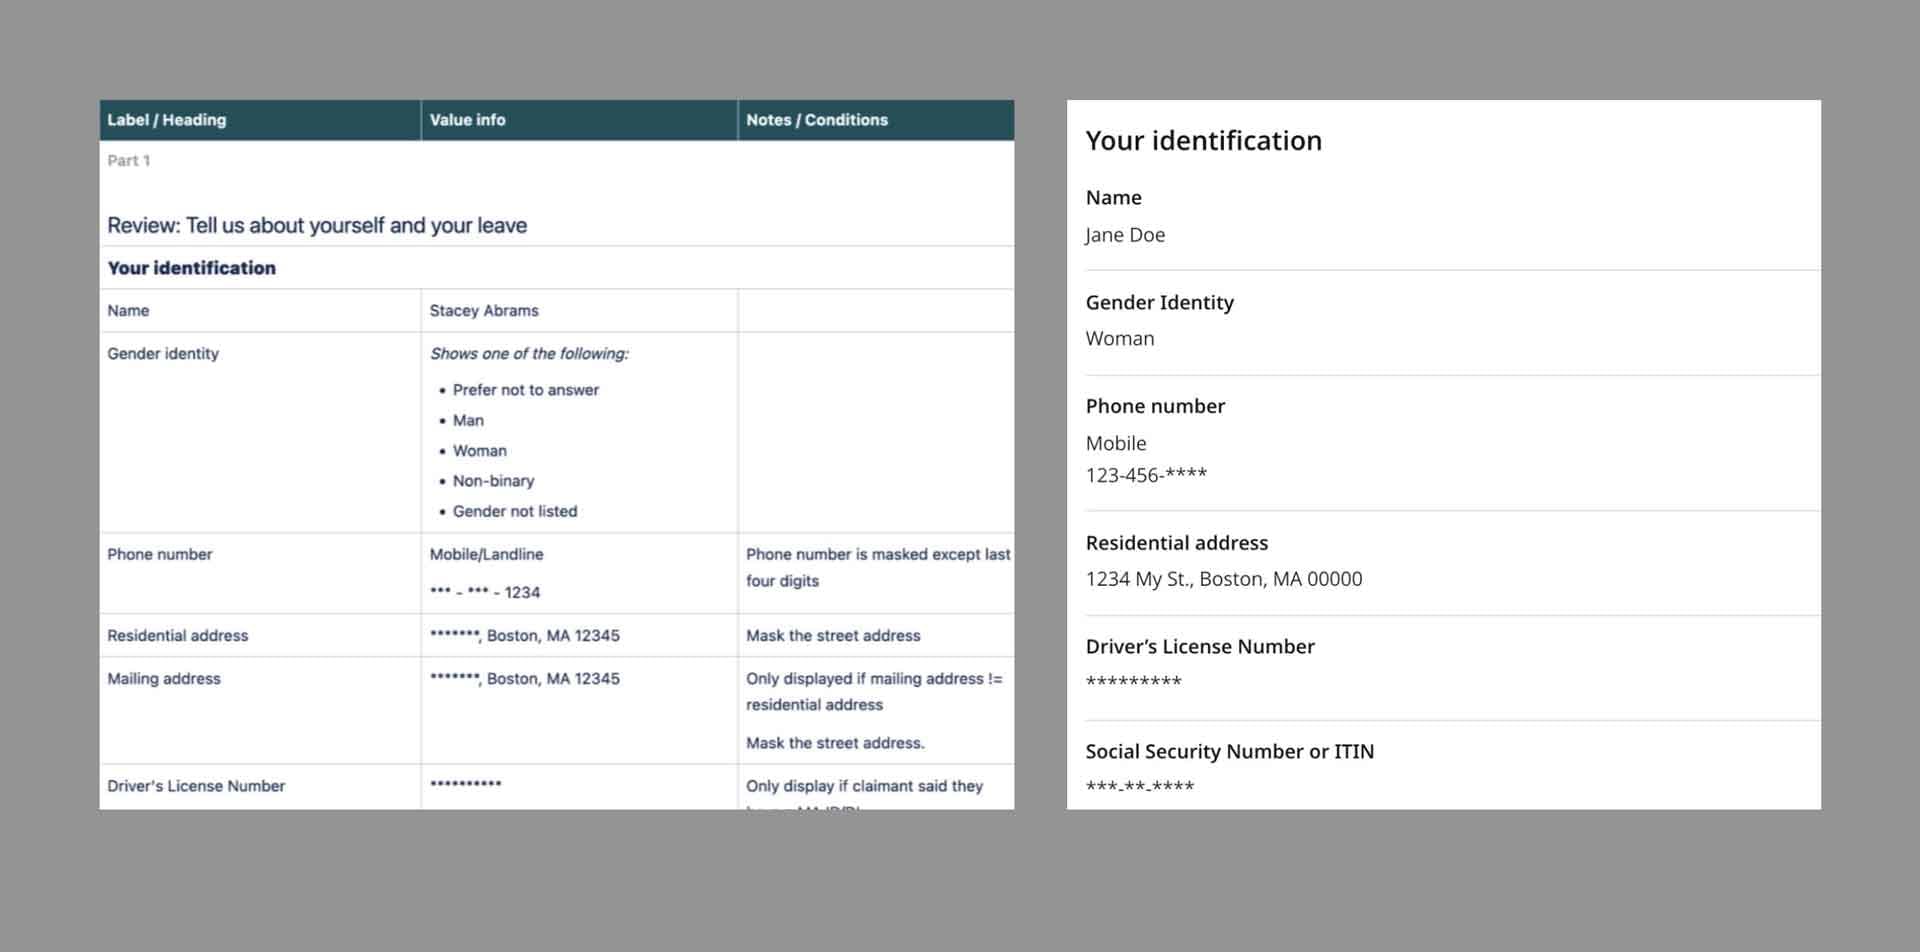 Screenshots showing implementation details for identification data.